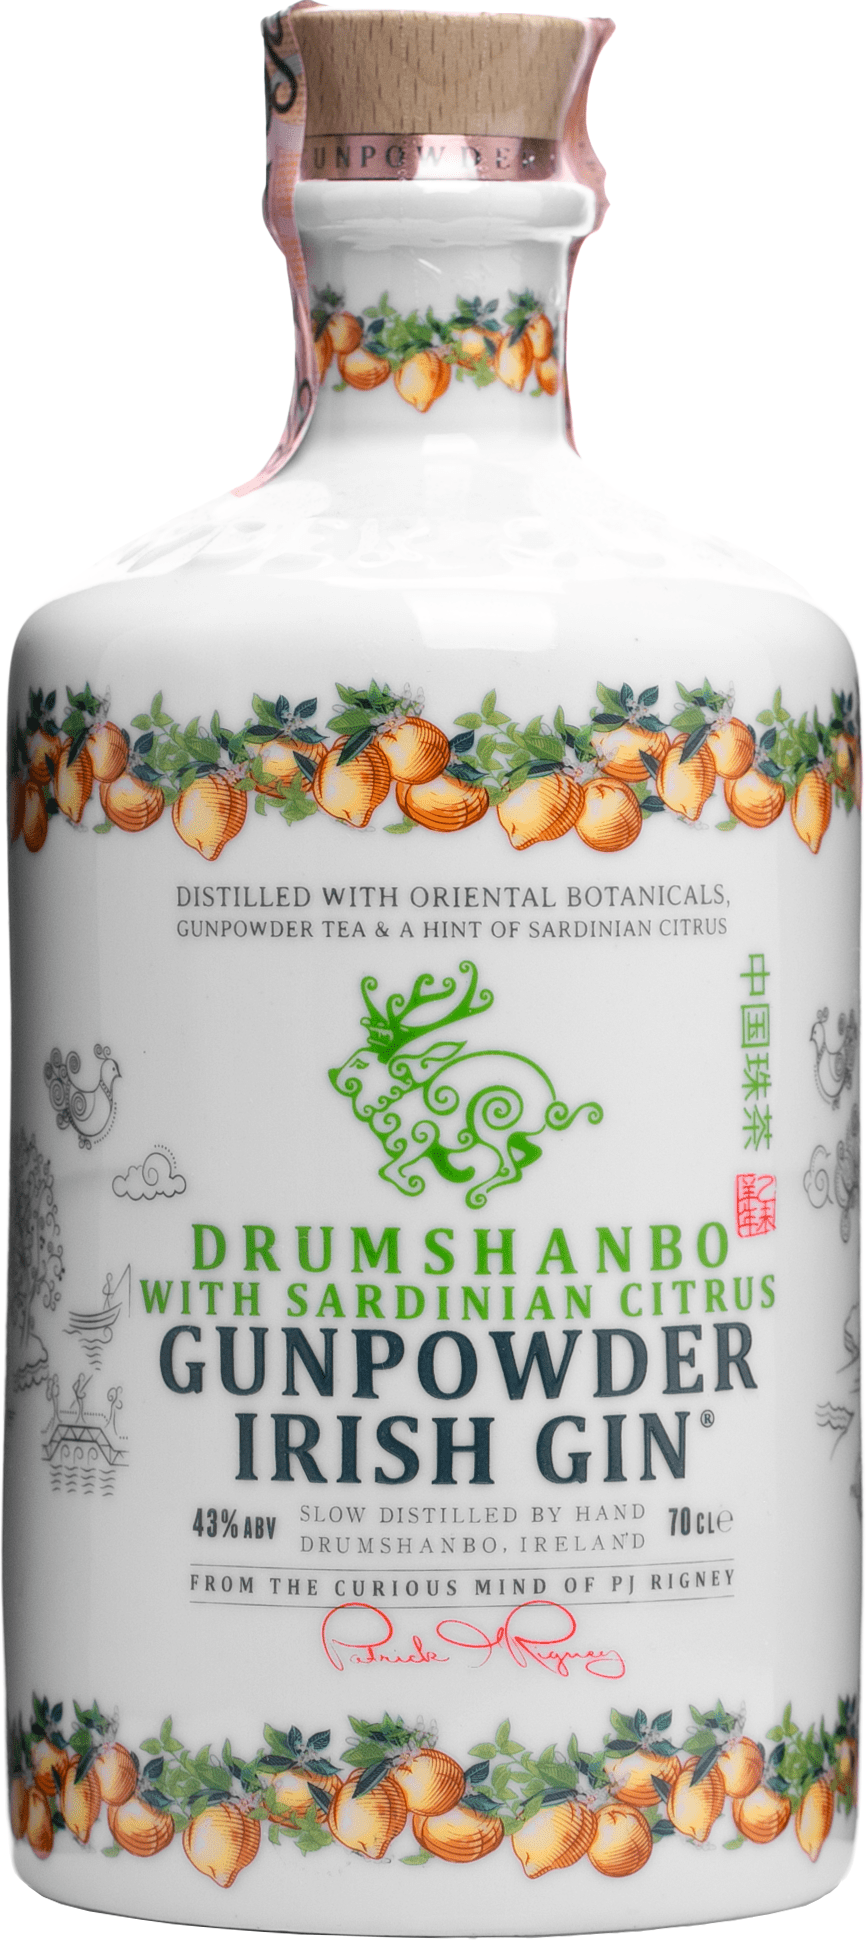 Drumshanbo Gunpowder Irish Gin Sardinian Citrus Edition keramická láhev 43% 0,7l (čistá flaša)